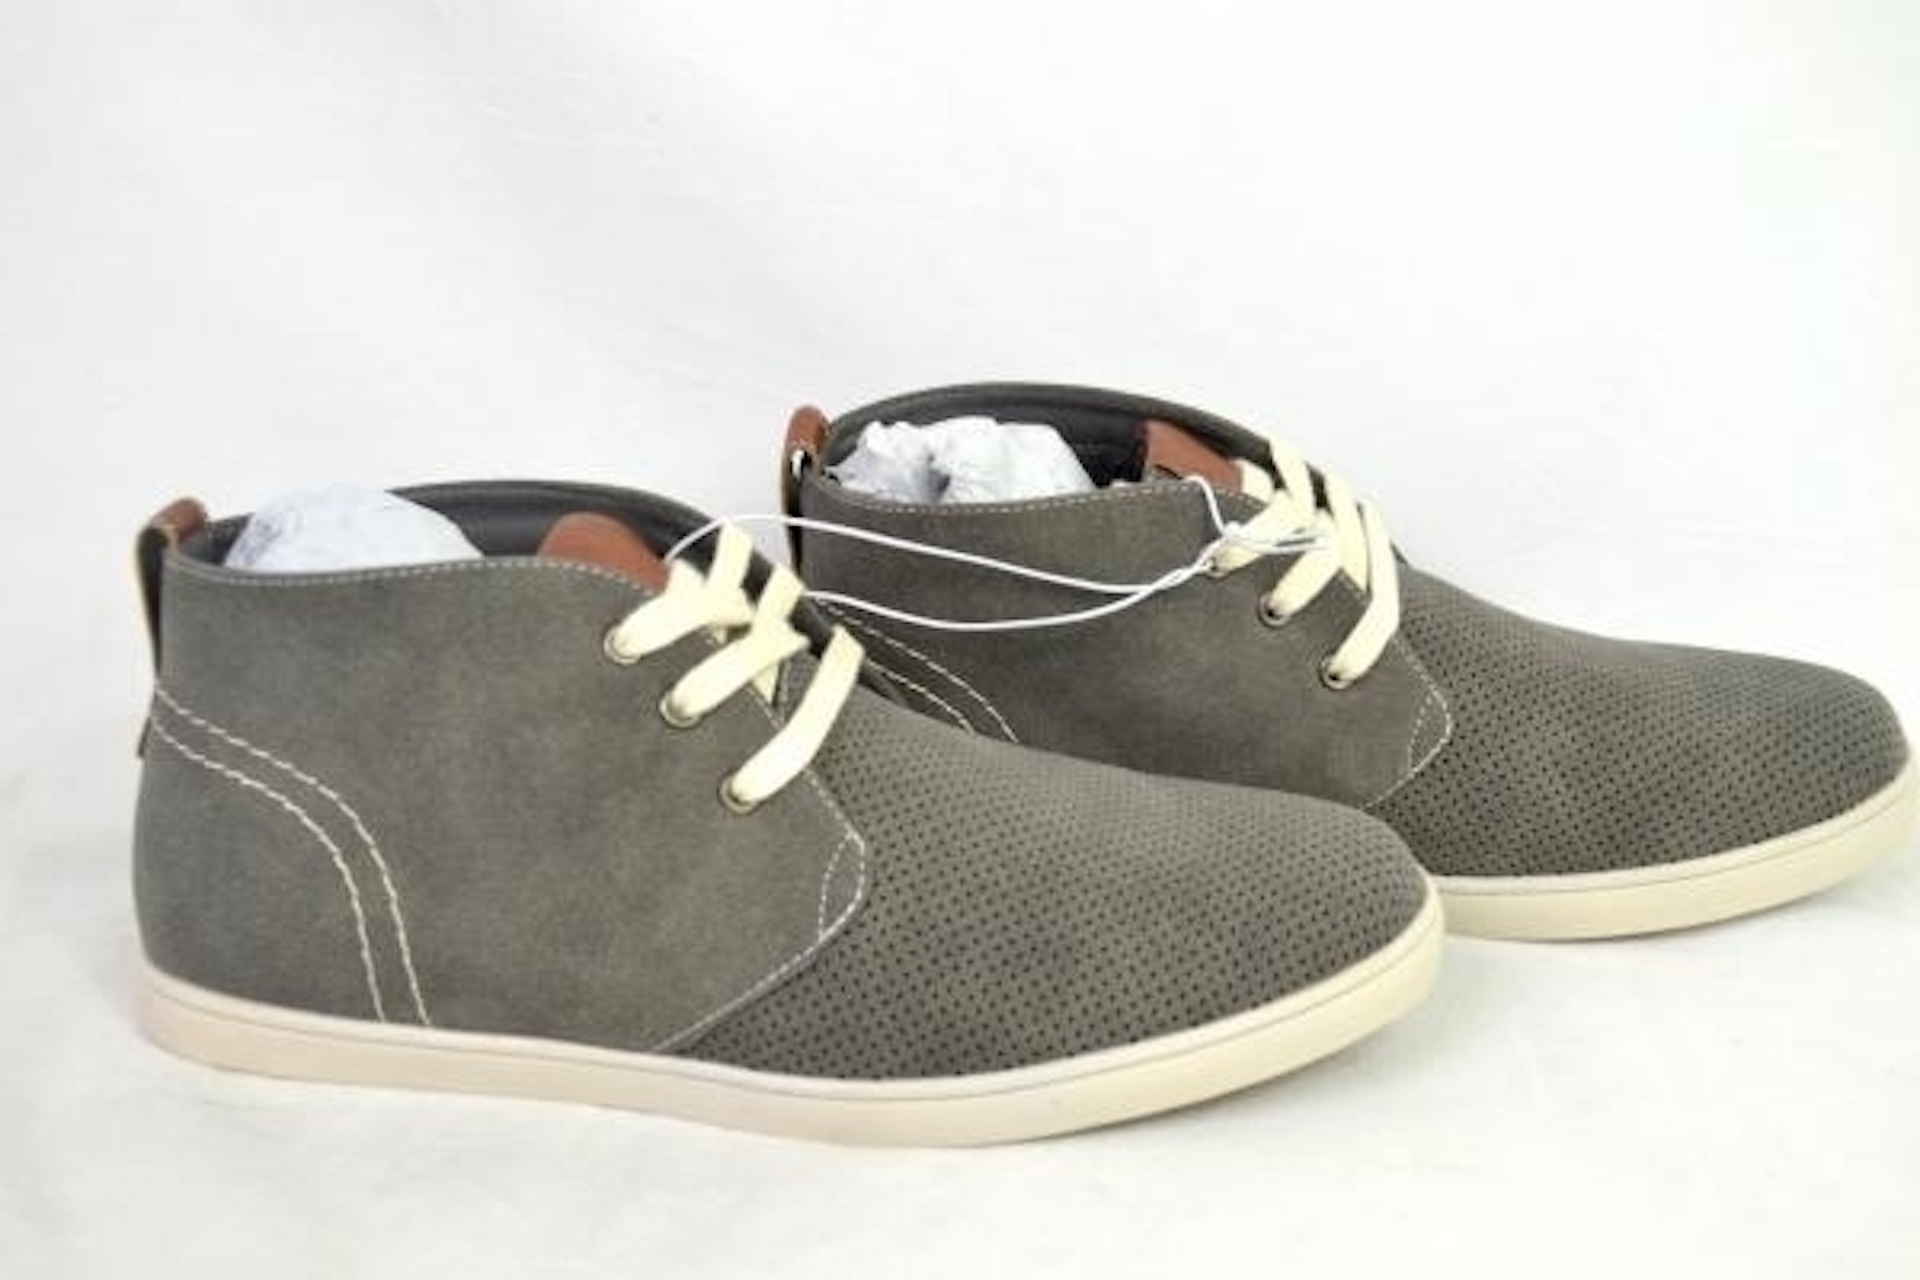 SoHo Cobbler Reece Boat Shoes - Grey 